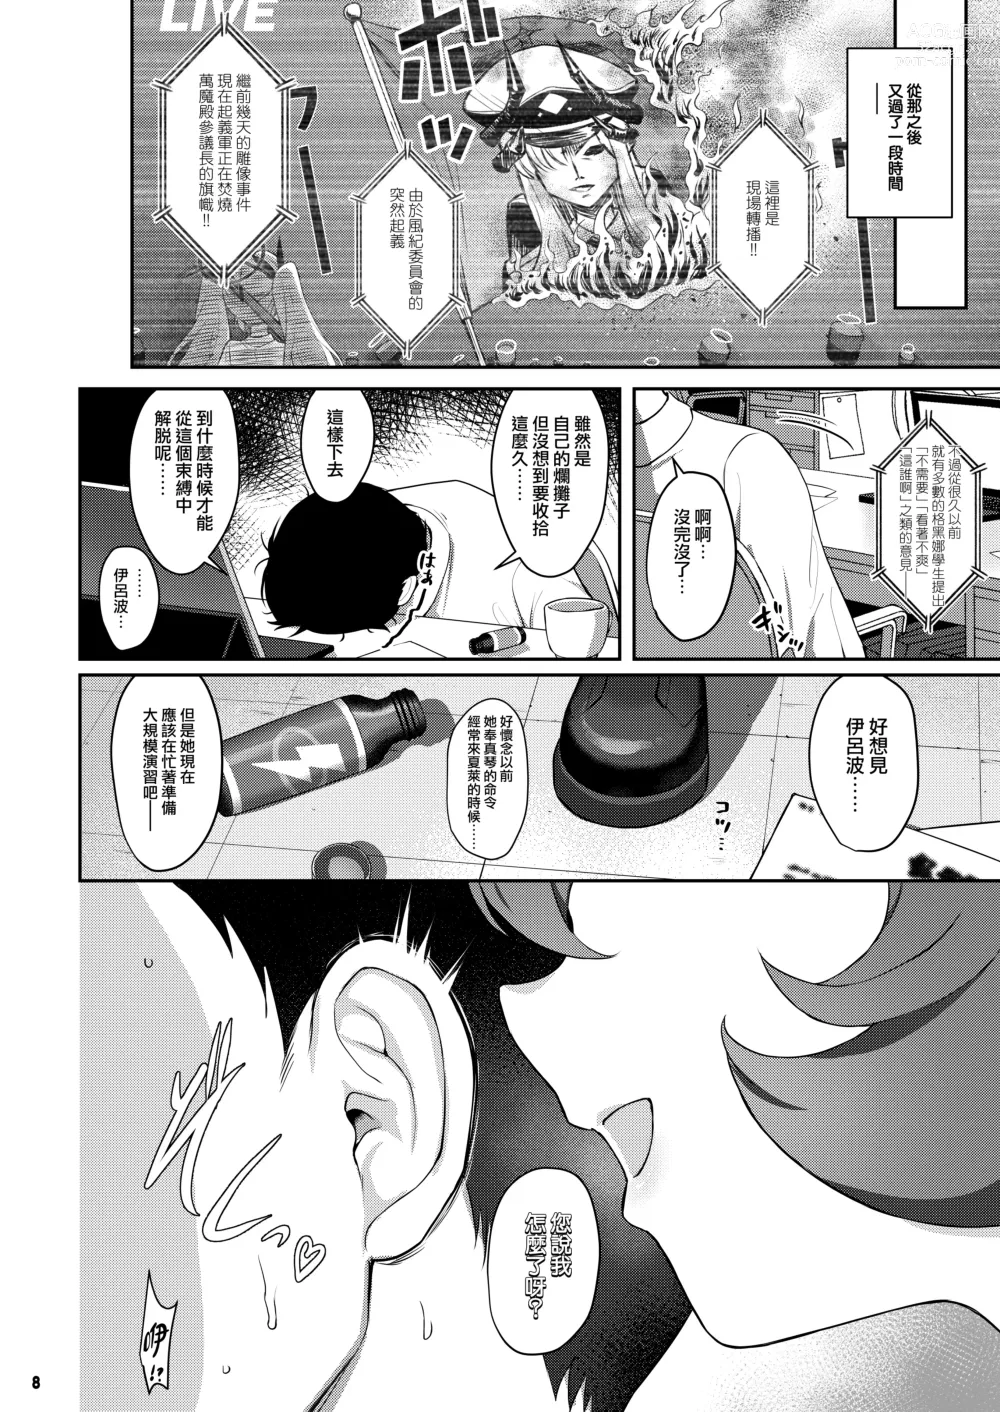 Page 8 of doujinshi Iroha Doku